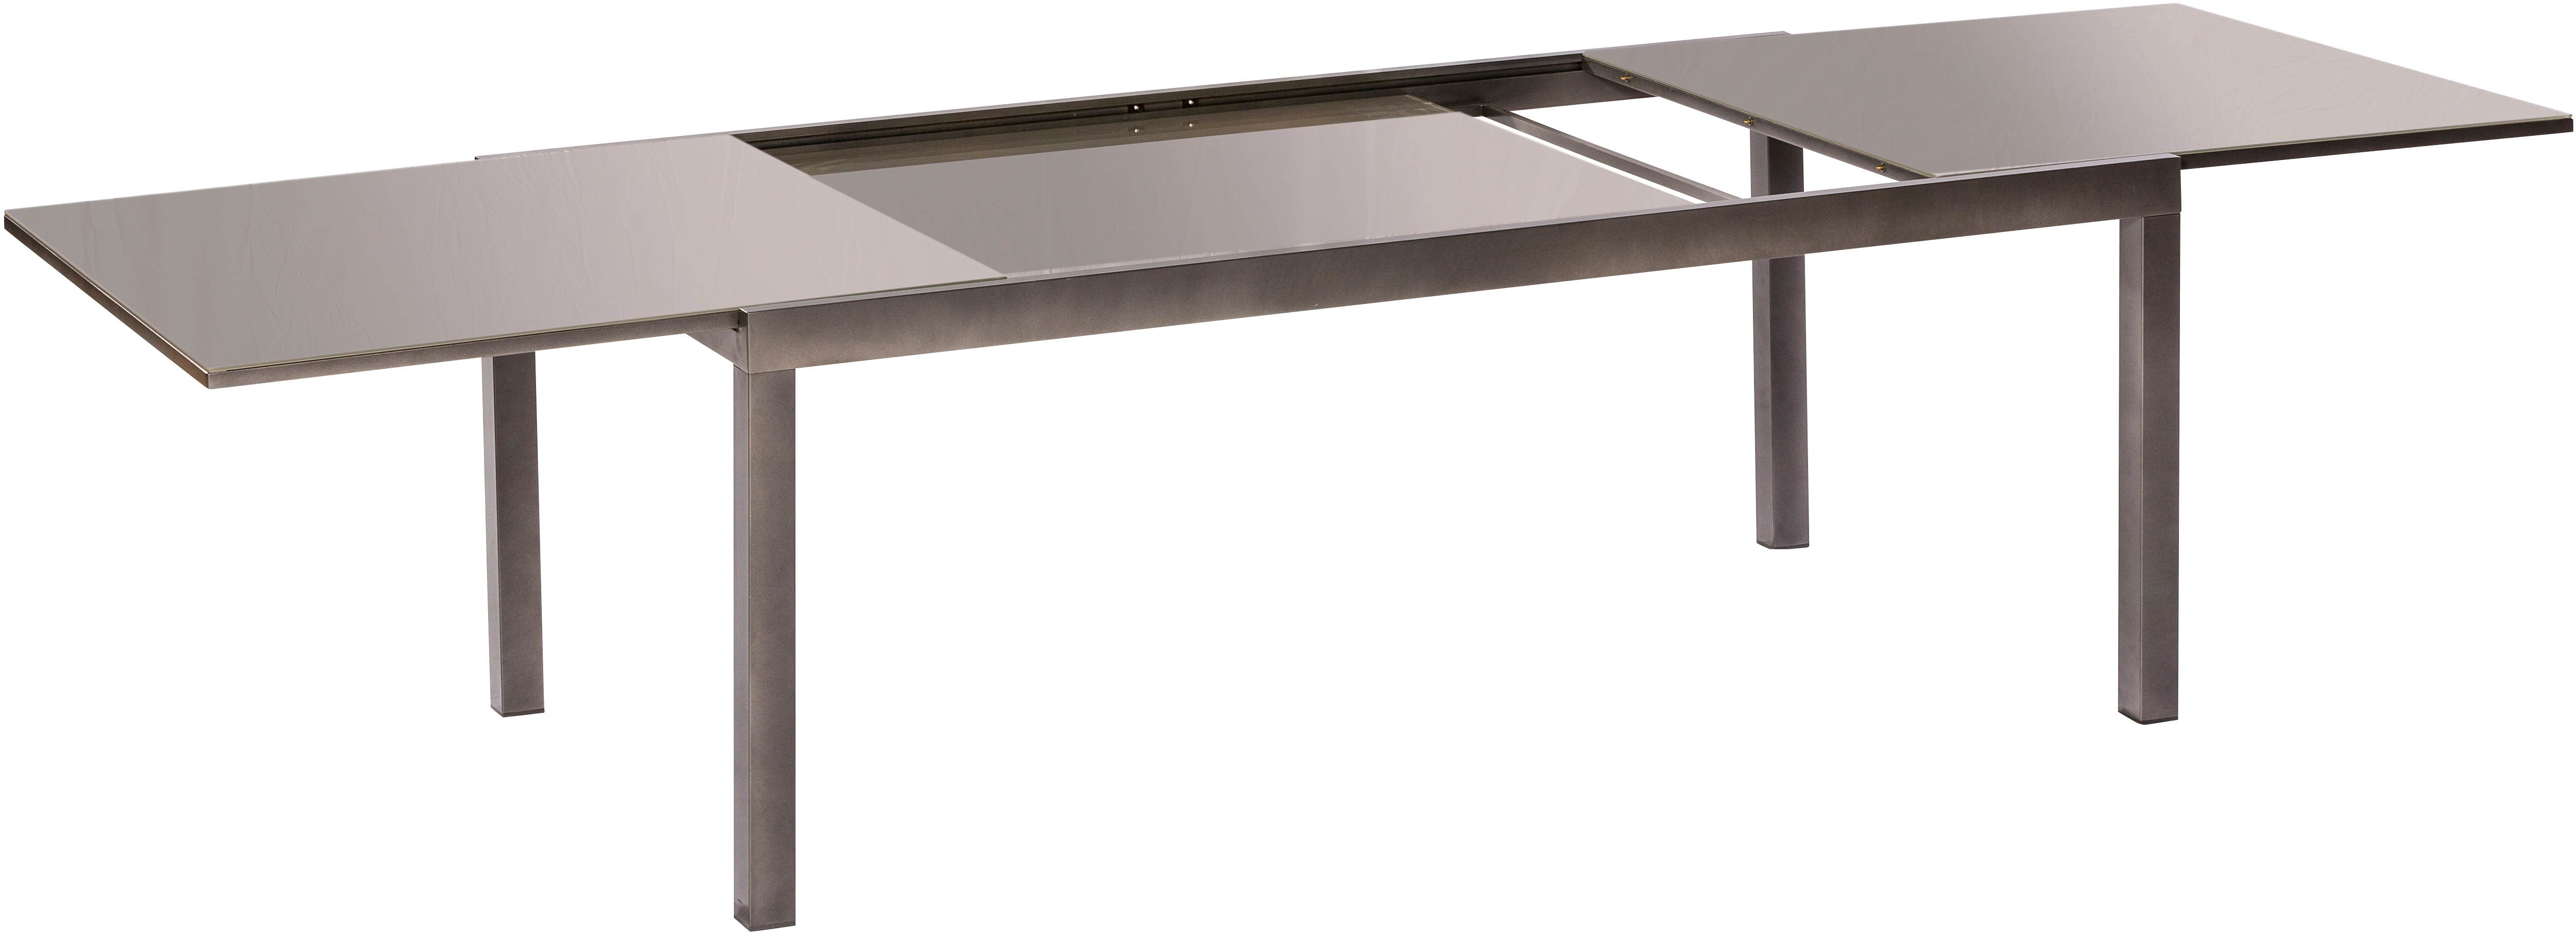 Merxx Gartentisch Semi Rechteckig Aluminium OBI cm cm 200/300 x 110 Ausziehbar bei Grau kaufen